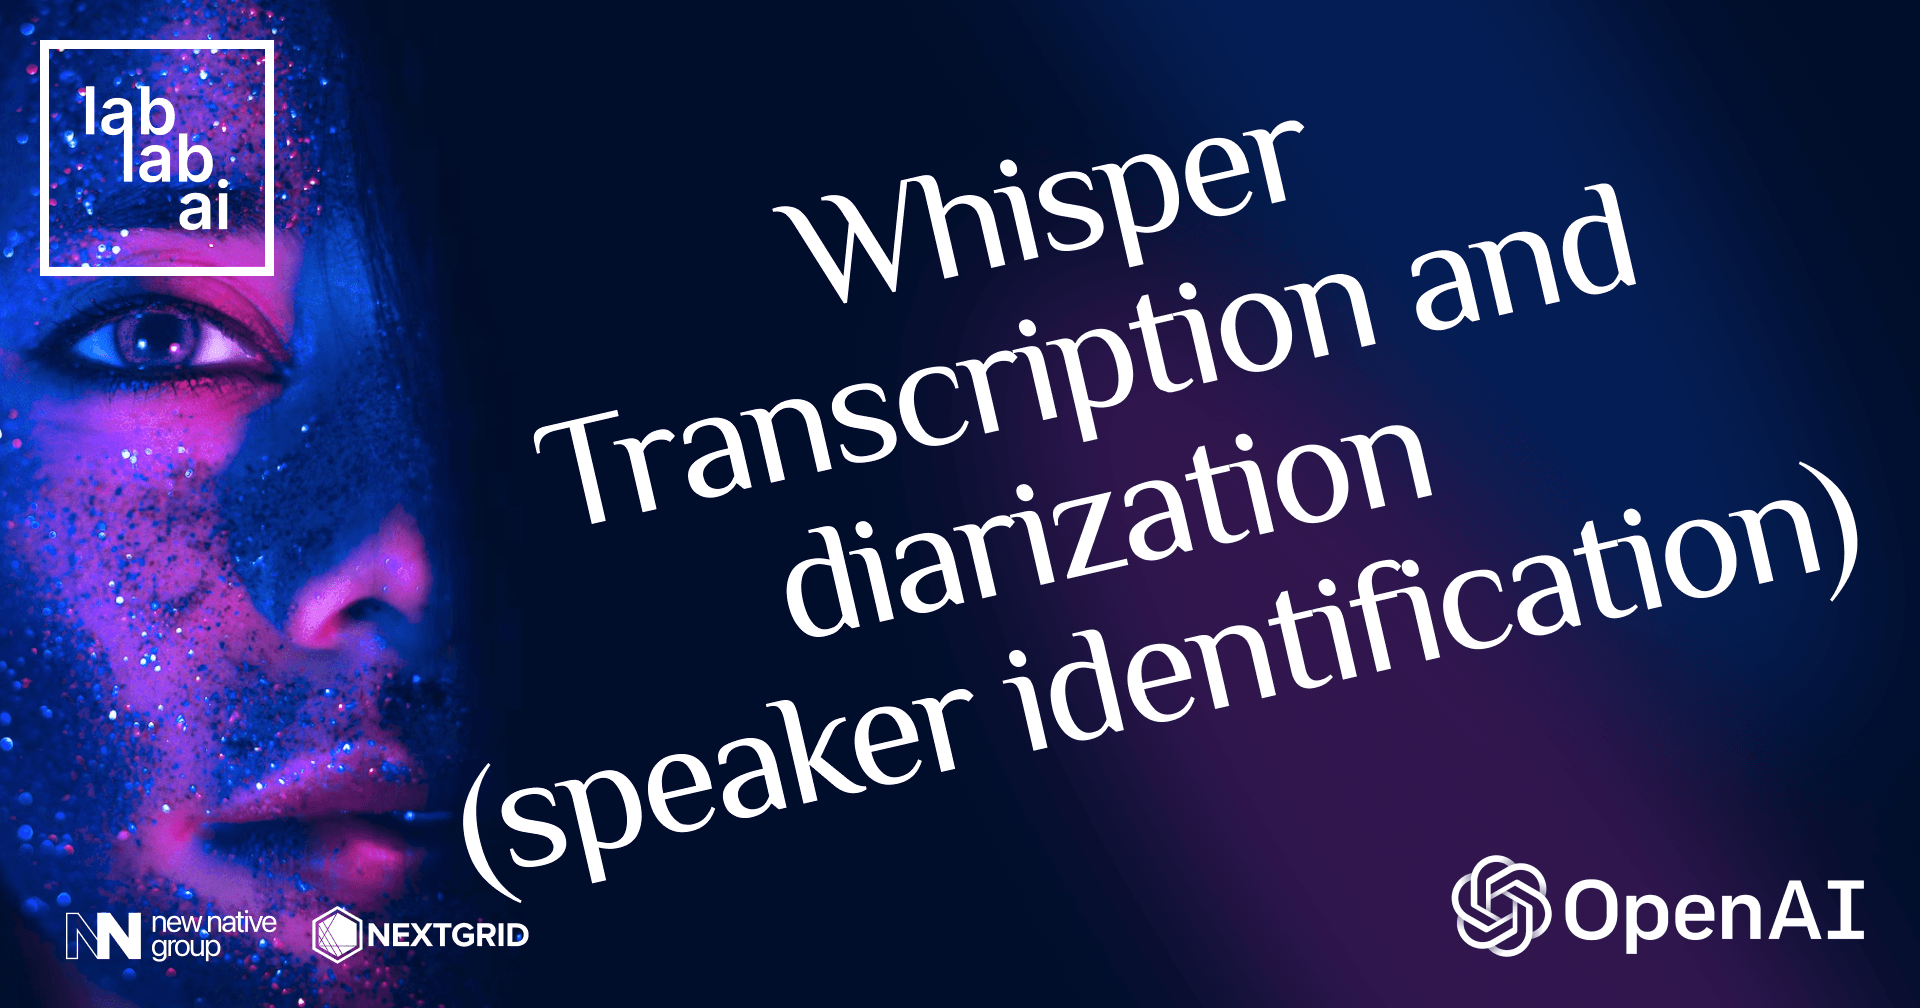 OpenAI Whisper tutorial: Whisper - Transcription and diarization (speaker identification)